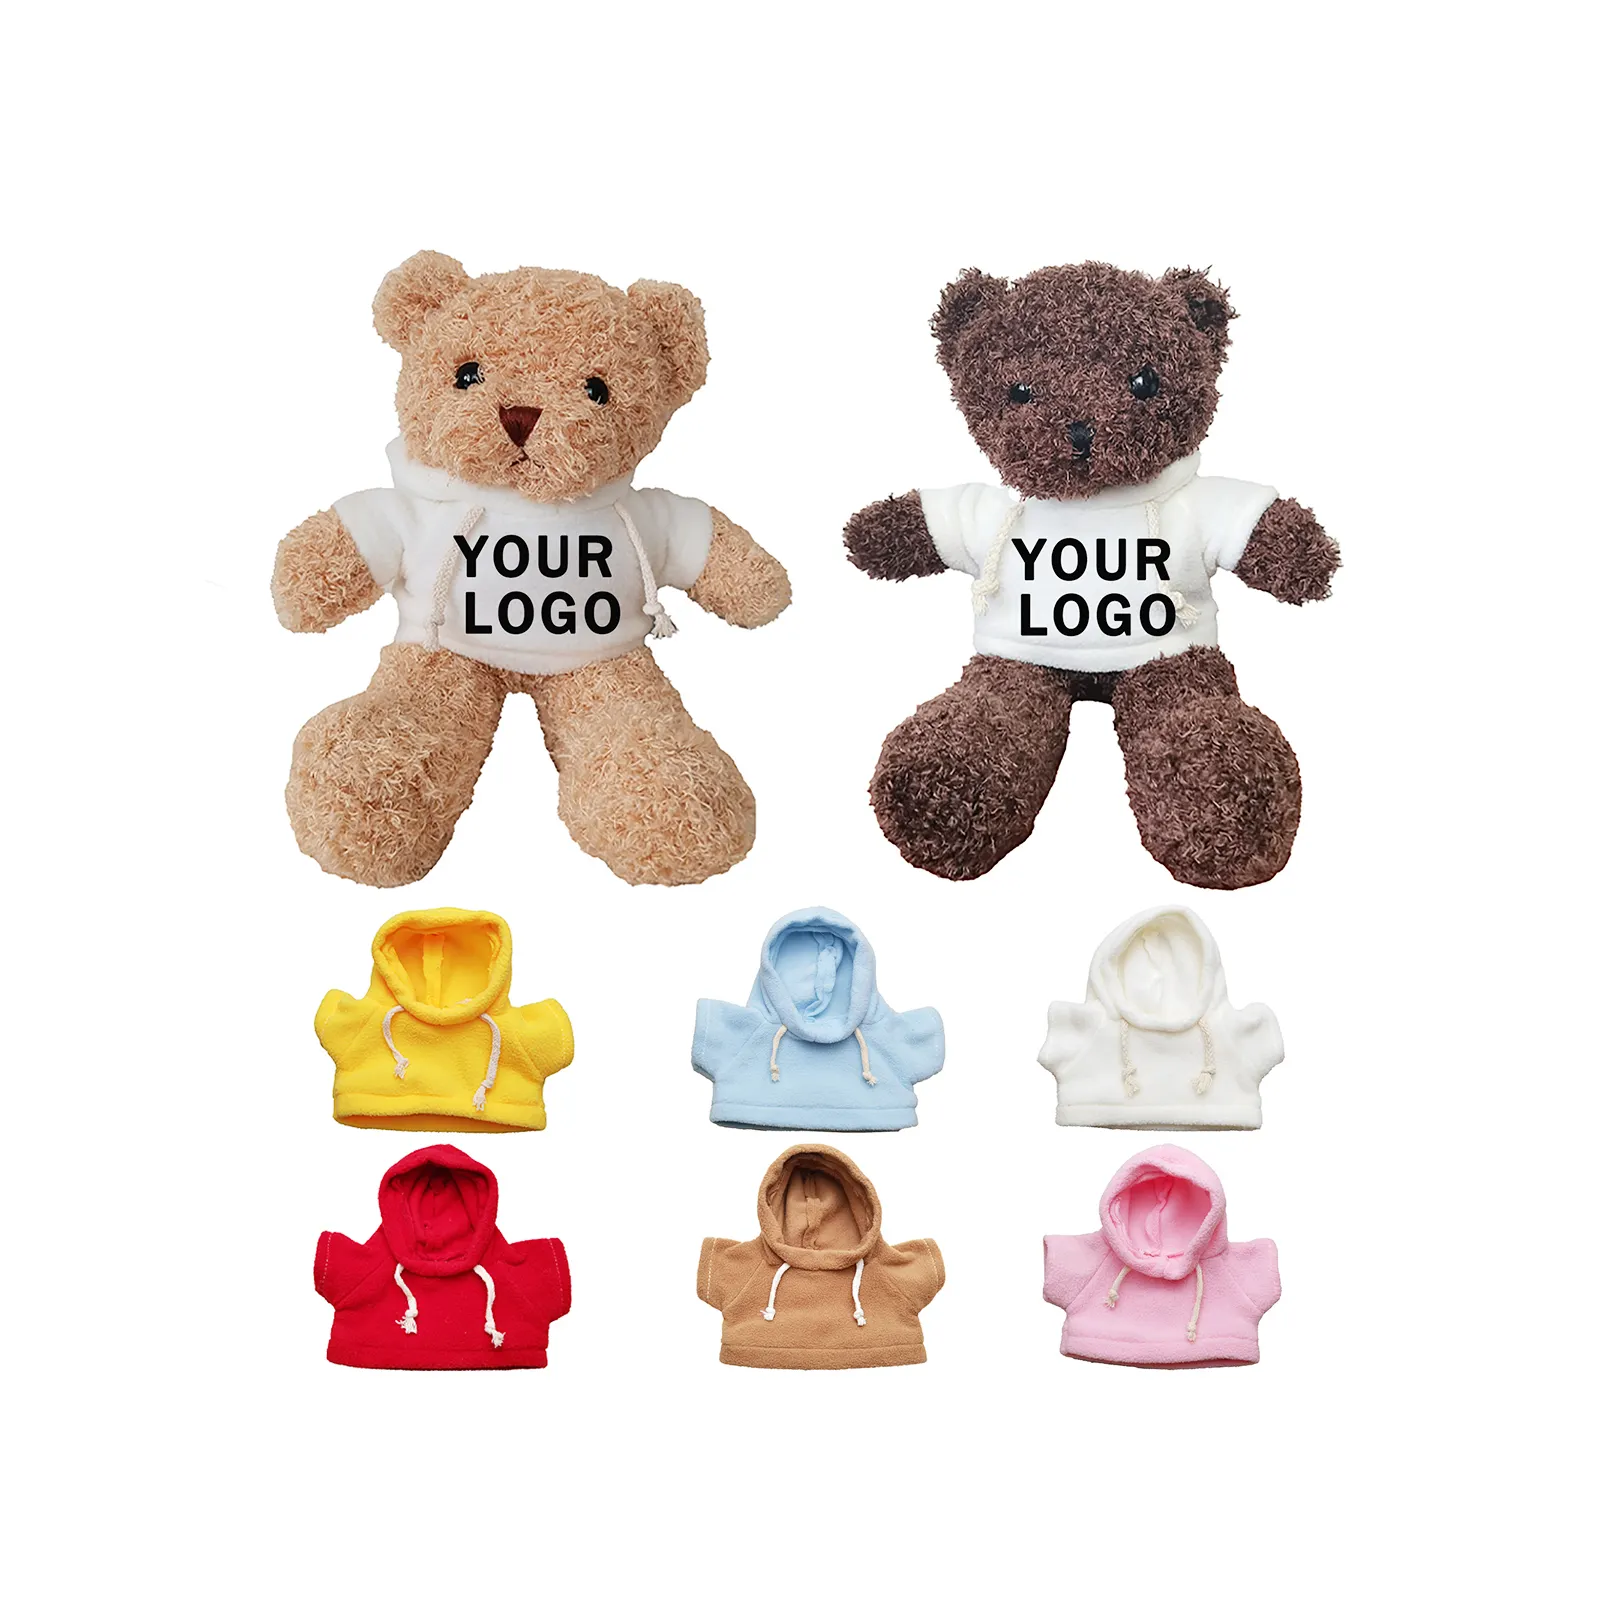 OEM ODM Custom Giant Small Baby Kids Used Stuffed Animals Plush Toy Fat Chubby T-shirt Teddy Bear With Your Logo